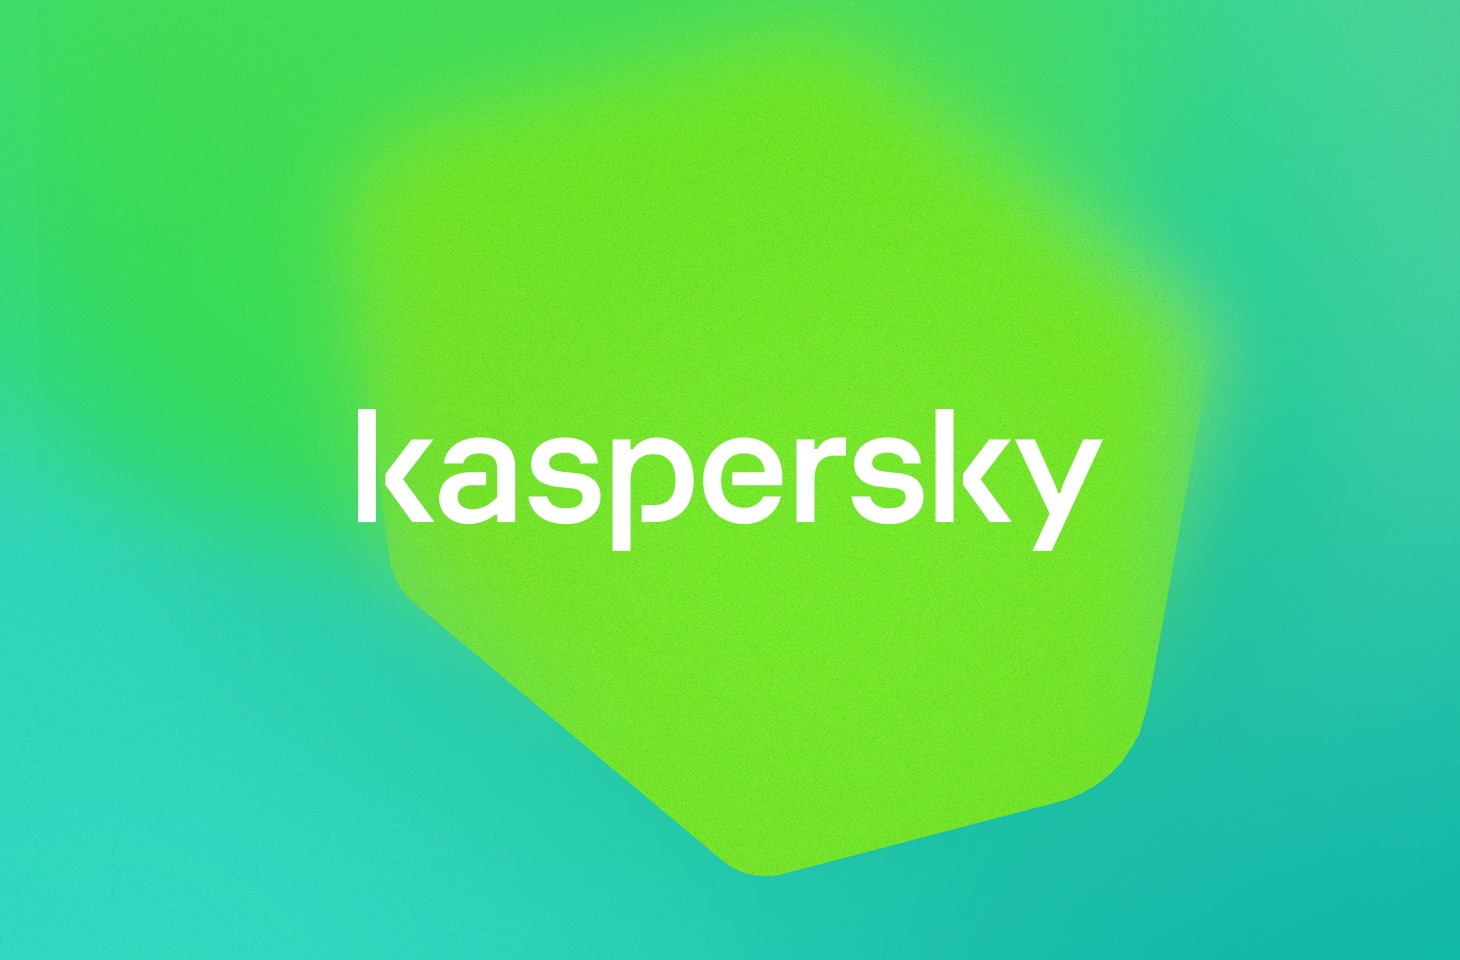 kaspersky total security activation code 2020